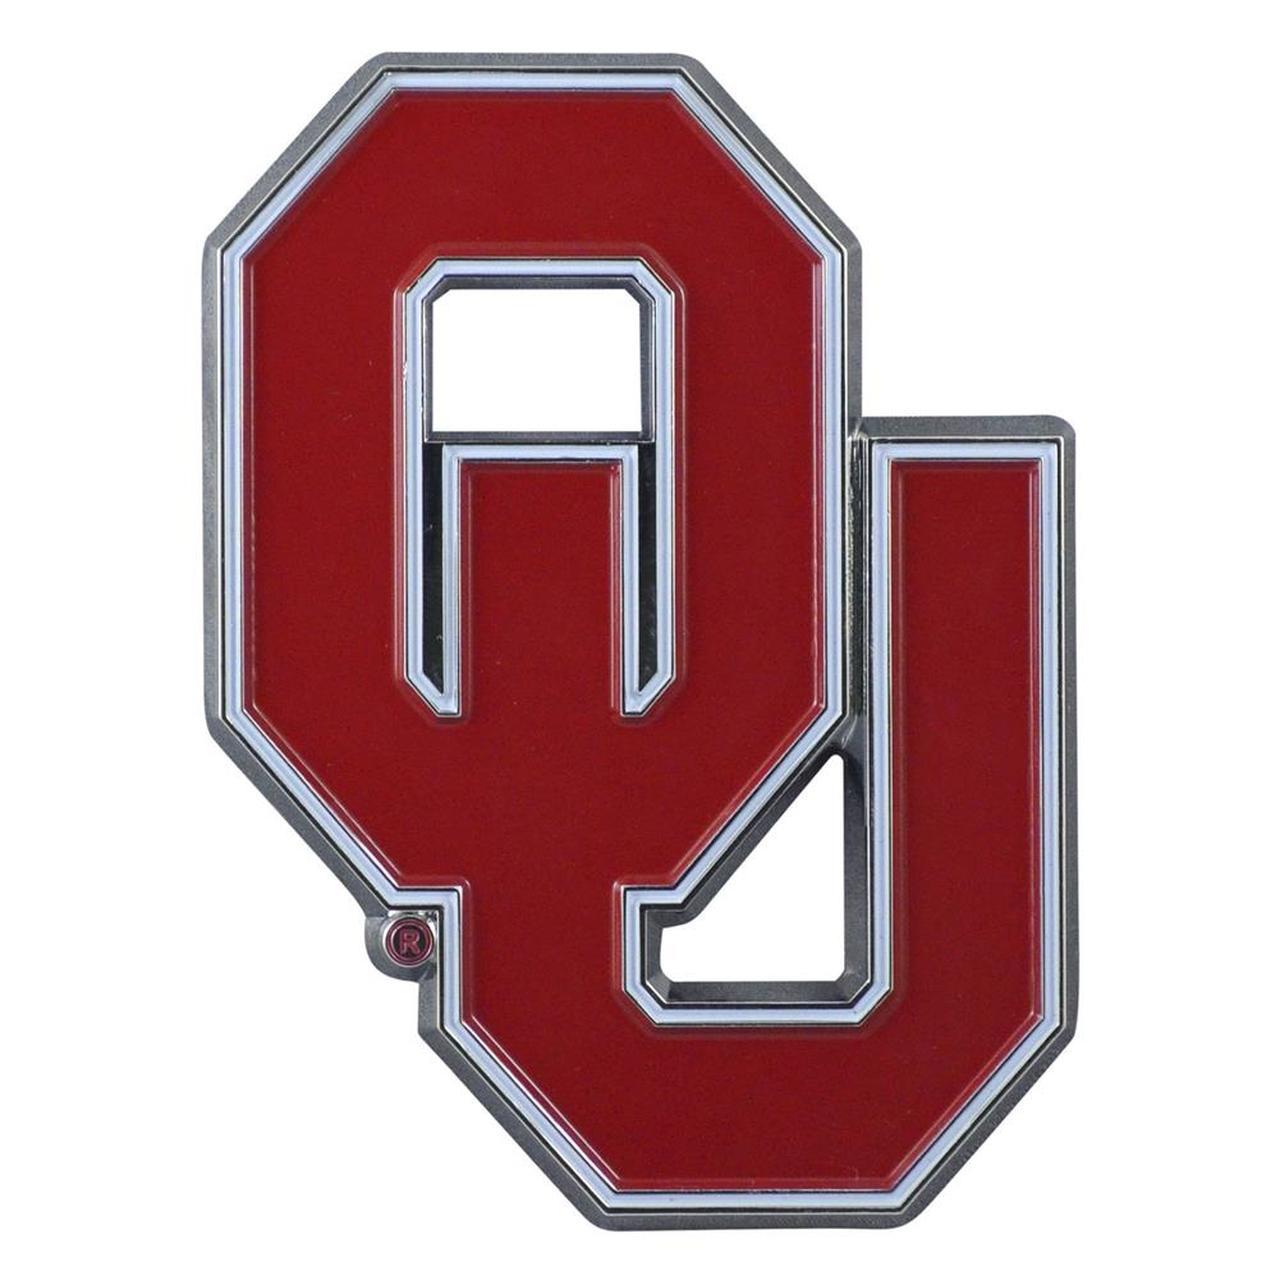 Sooners Logo - University of Oklahoma Sooners Car Emblem Color Metal Car Logo Decal